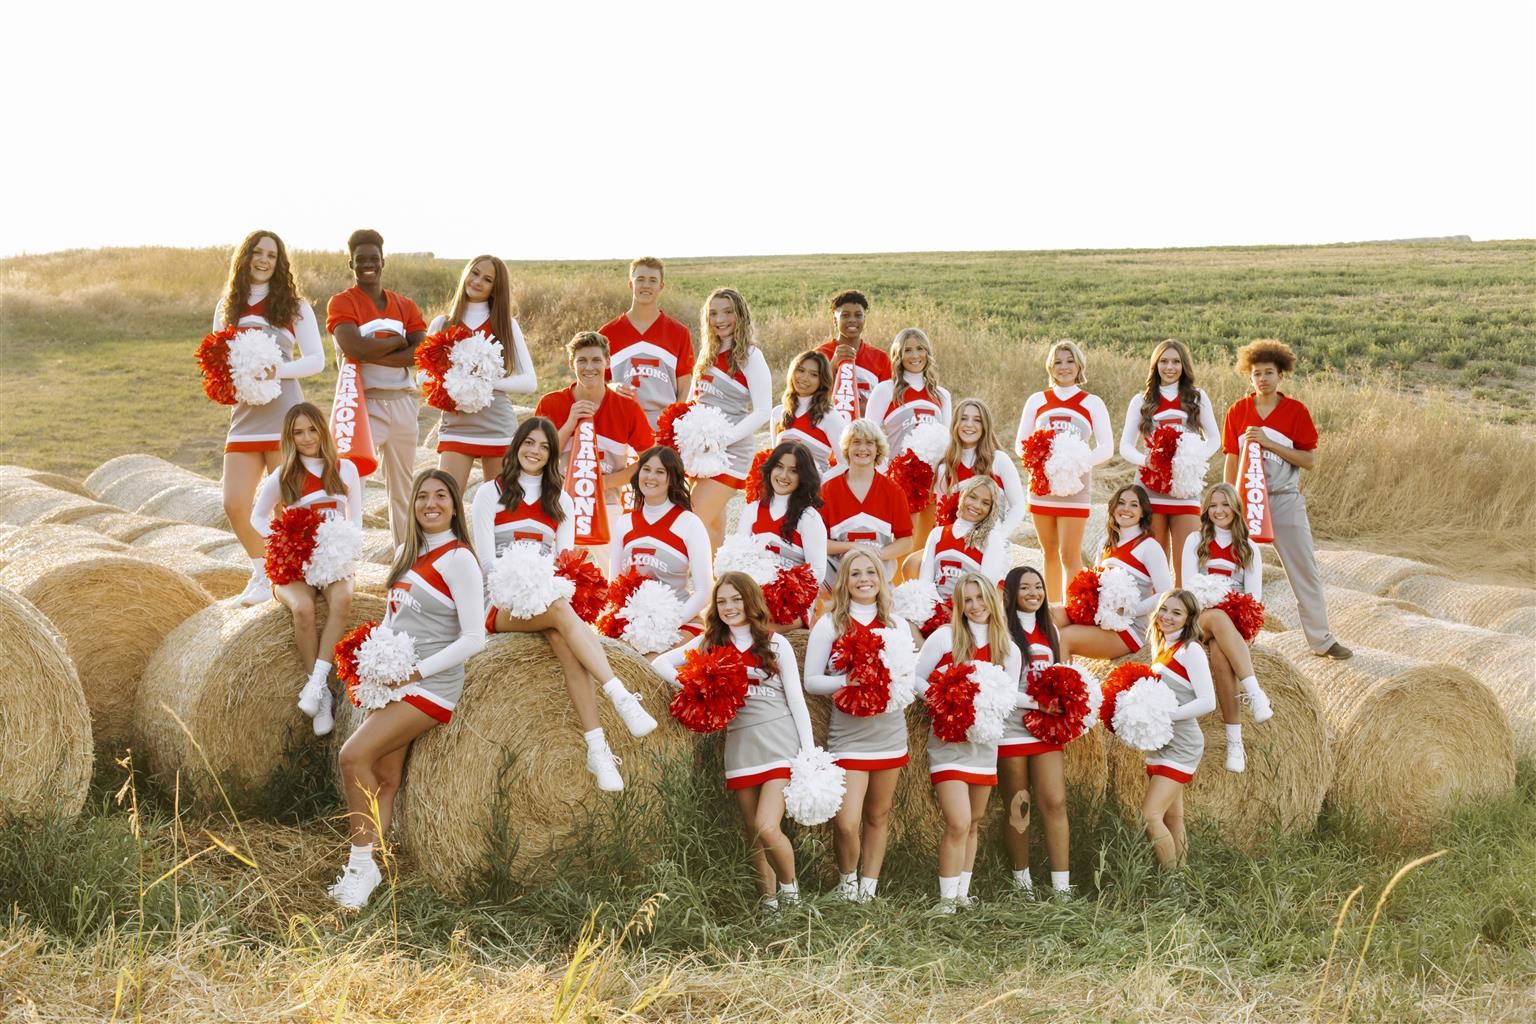 Photo of Cheerleaders in a group